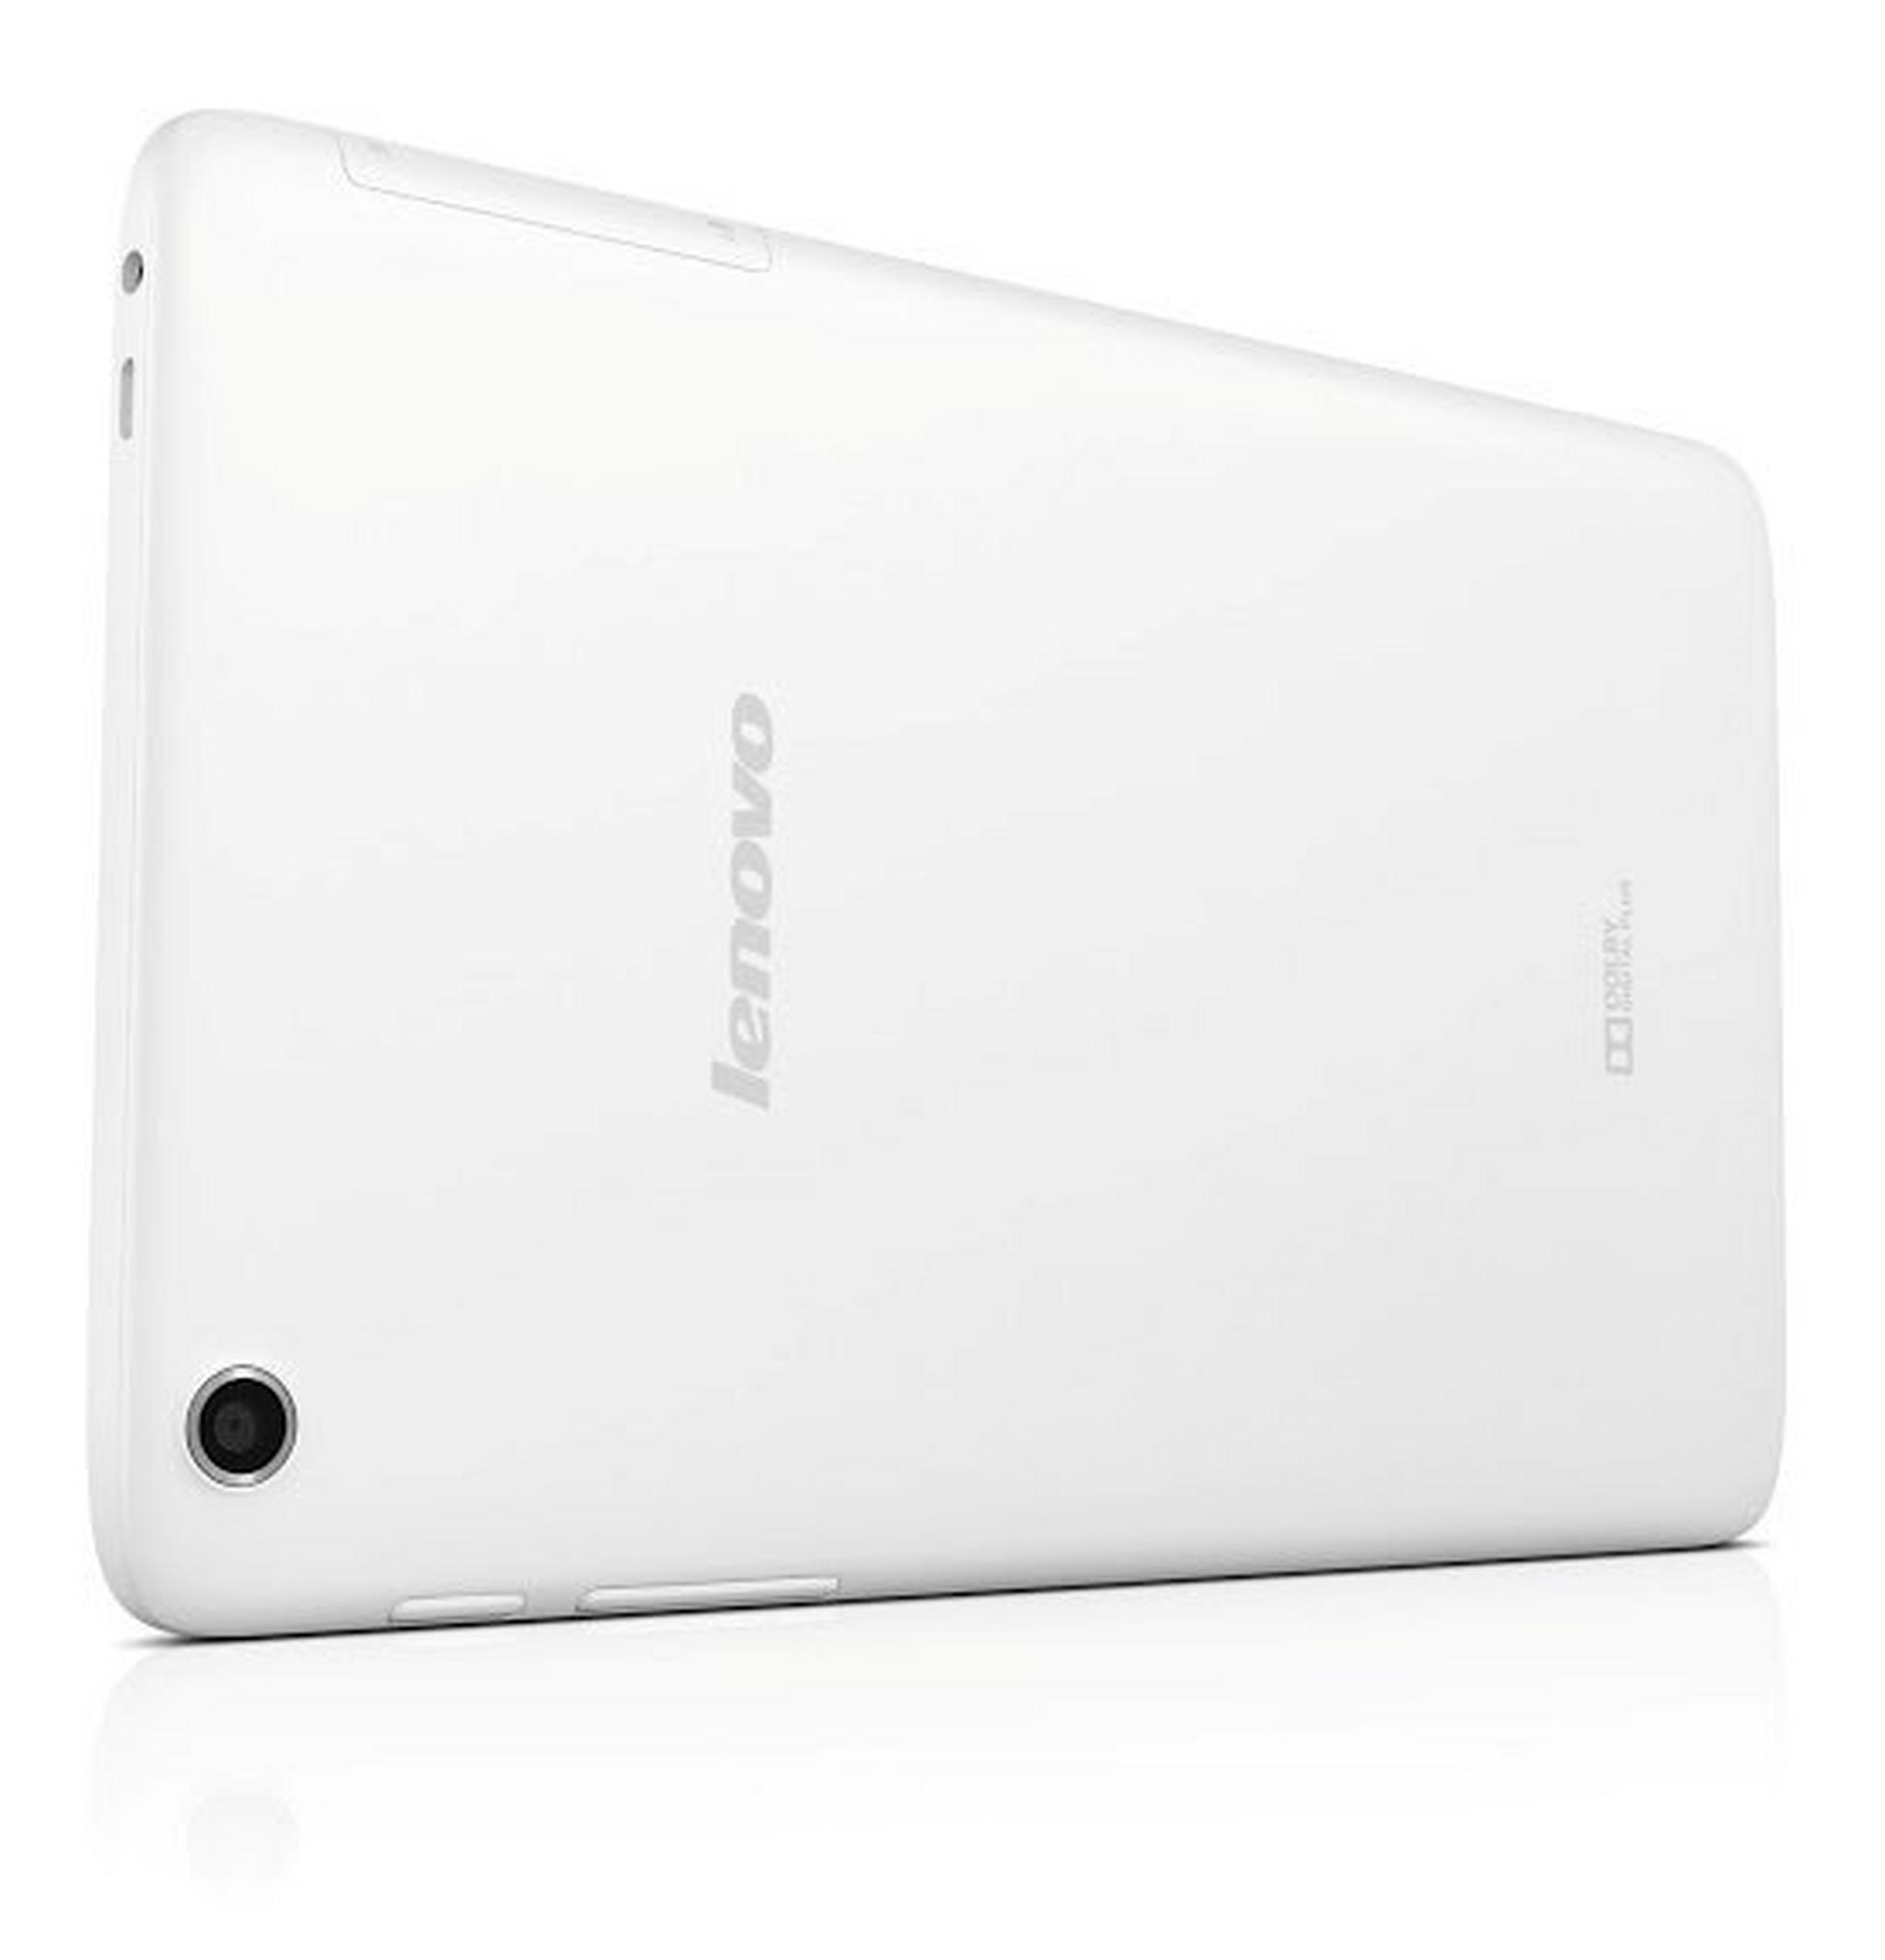 Lenovo A3300 8GB RAM 2G (Wi-Fi) 7-inch Tablet - White